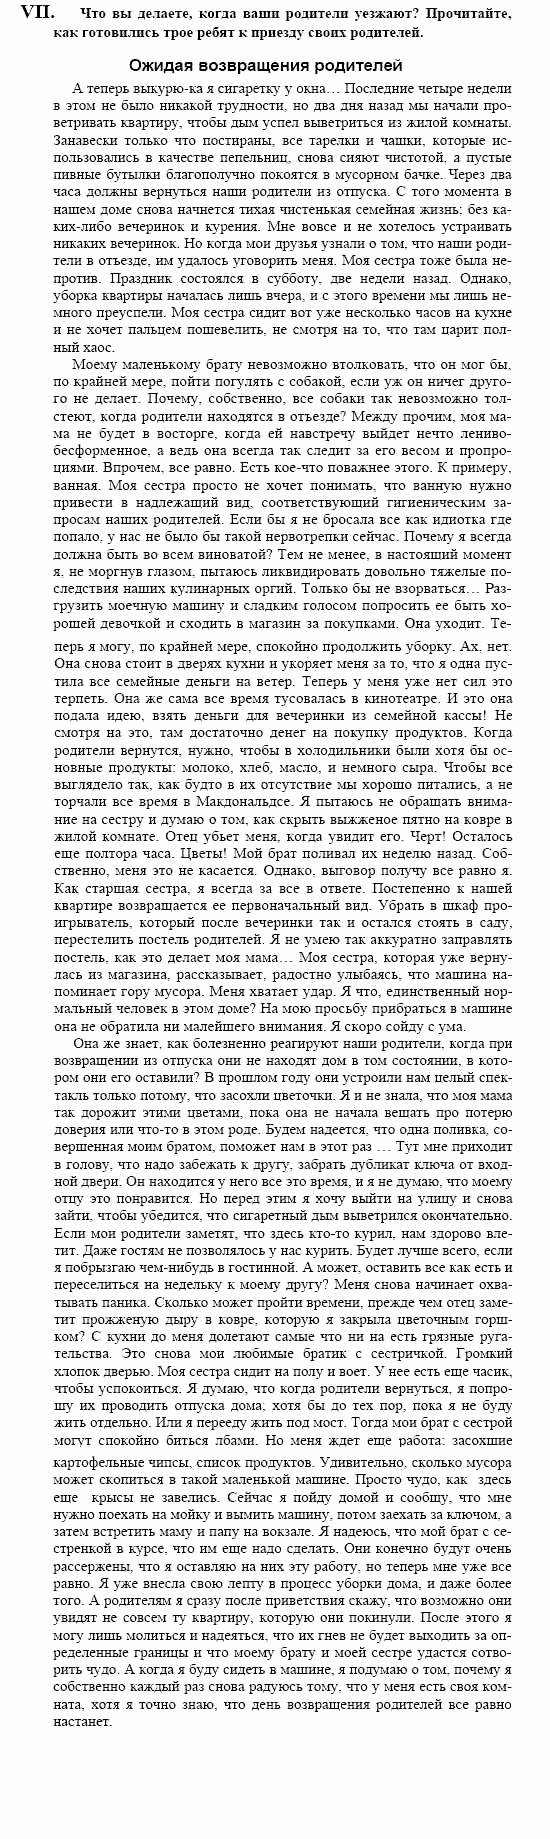 Немецкий язык, 10 класс, Воронина, Карелина, 2002, VII Задание: text